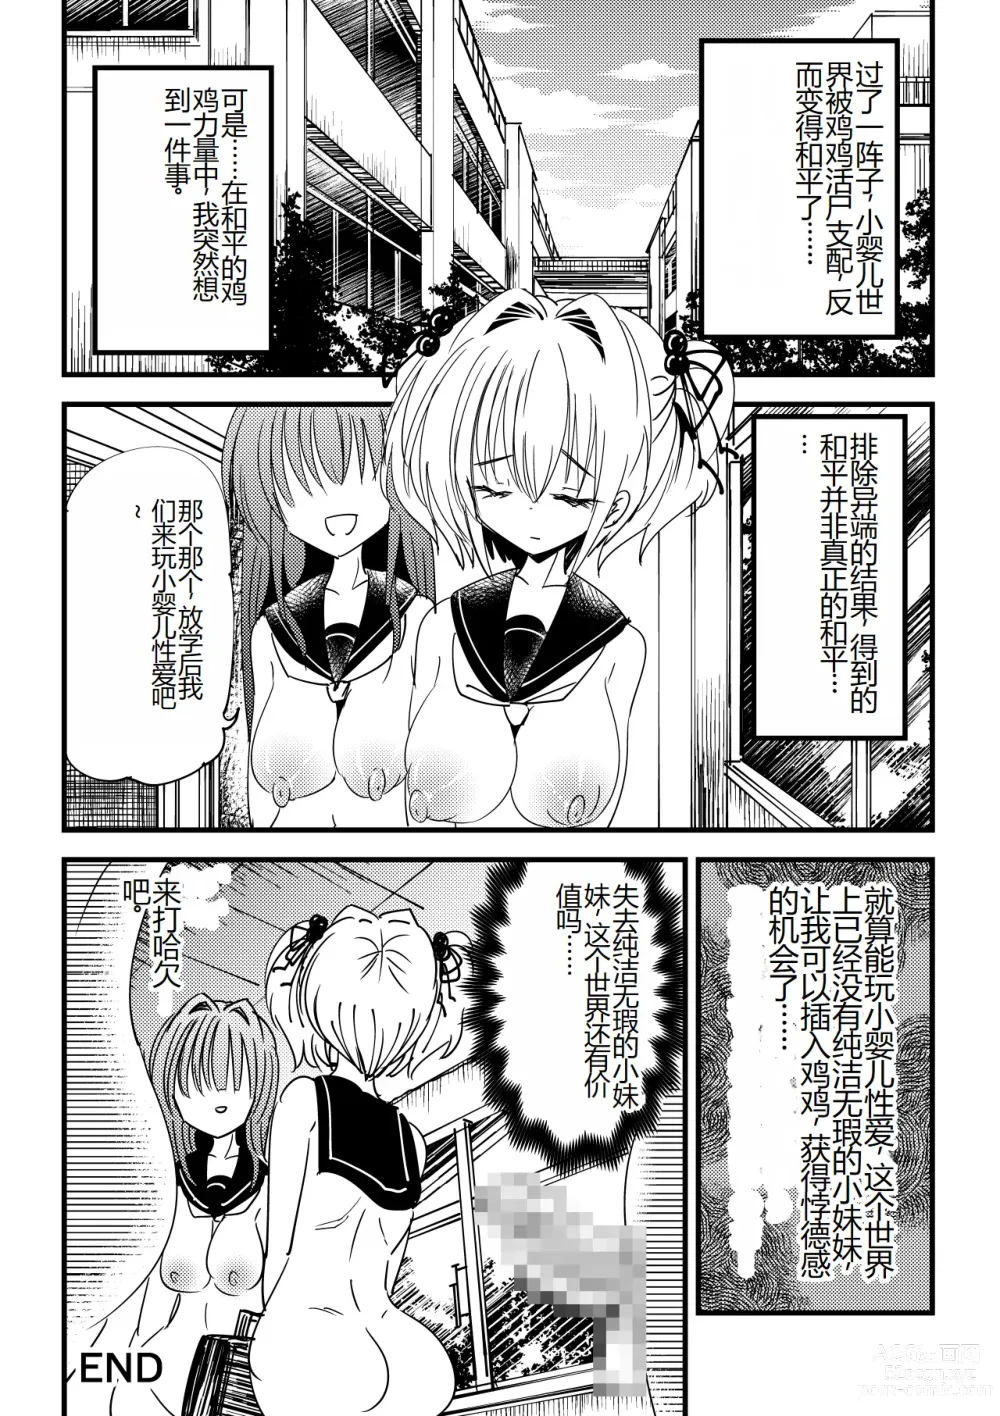 Page 21 of doujinshi Kansen sennou futanari akachan